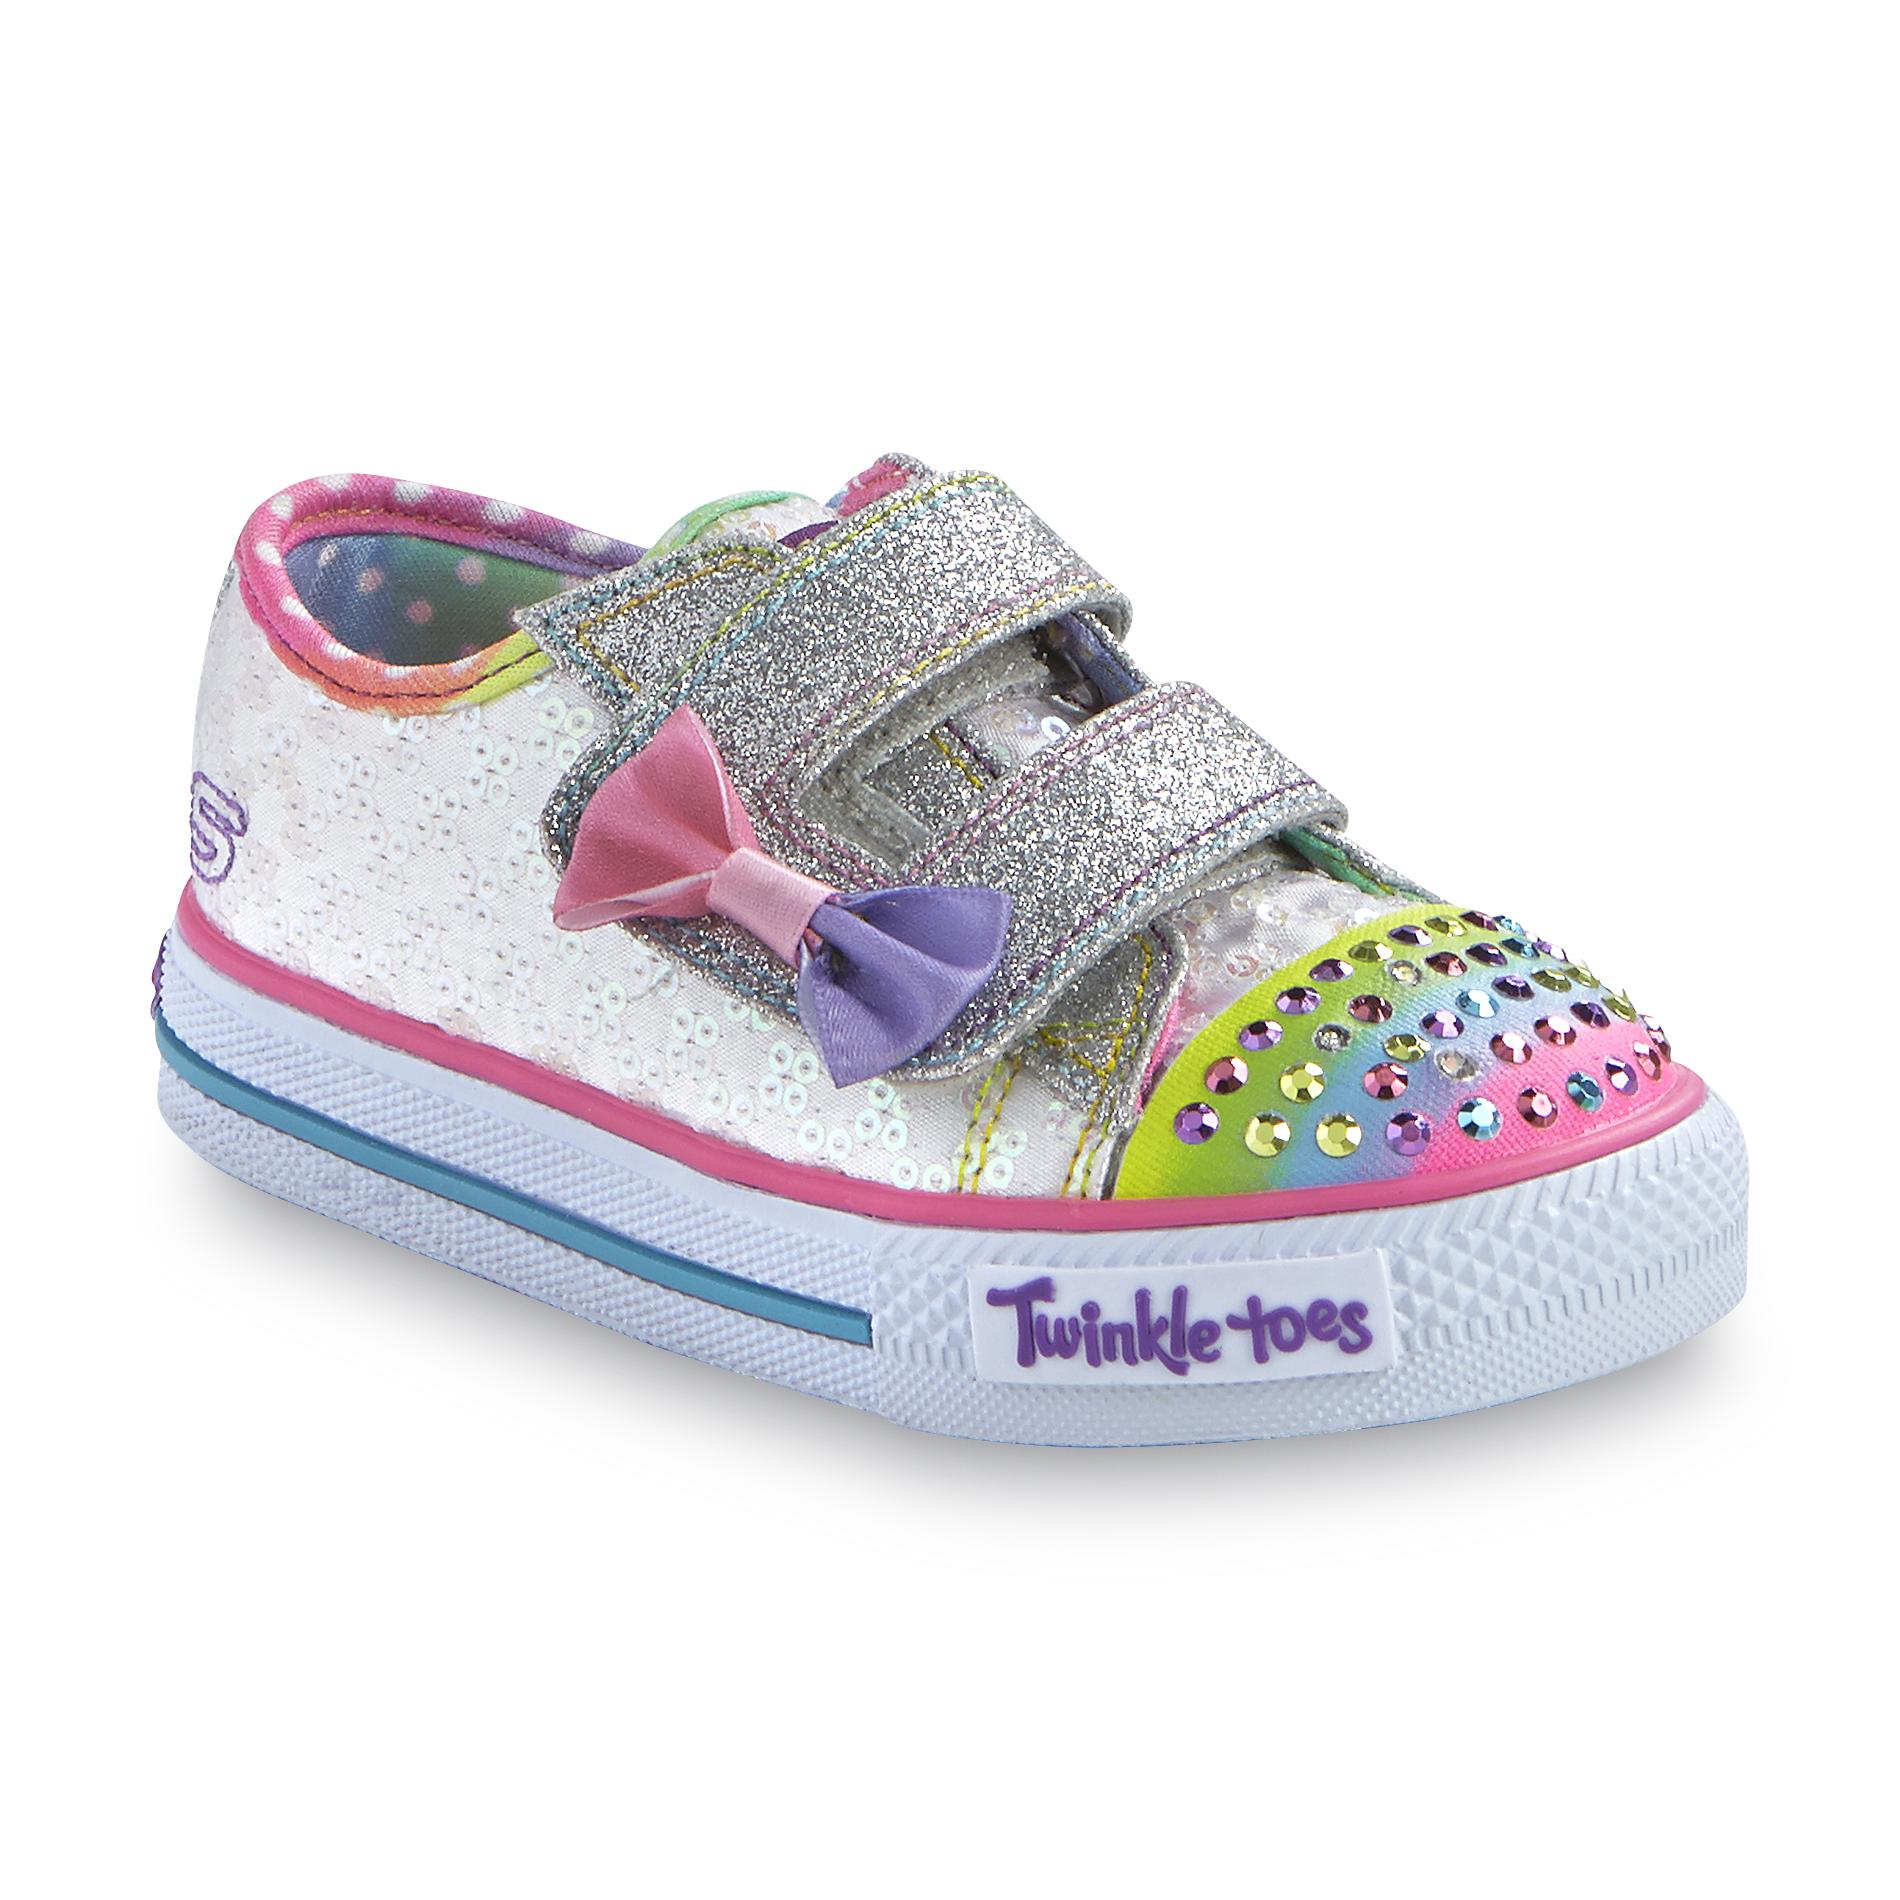 Skechers Toddler Girl's Twinkle Toes Light-Up Sneaker